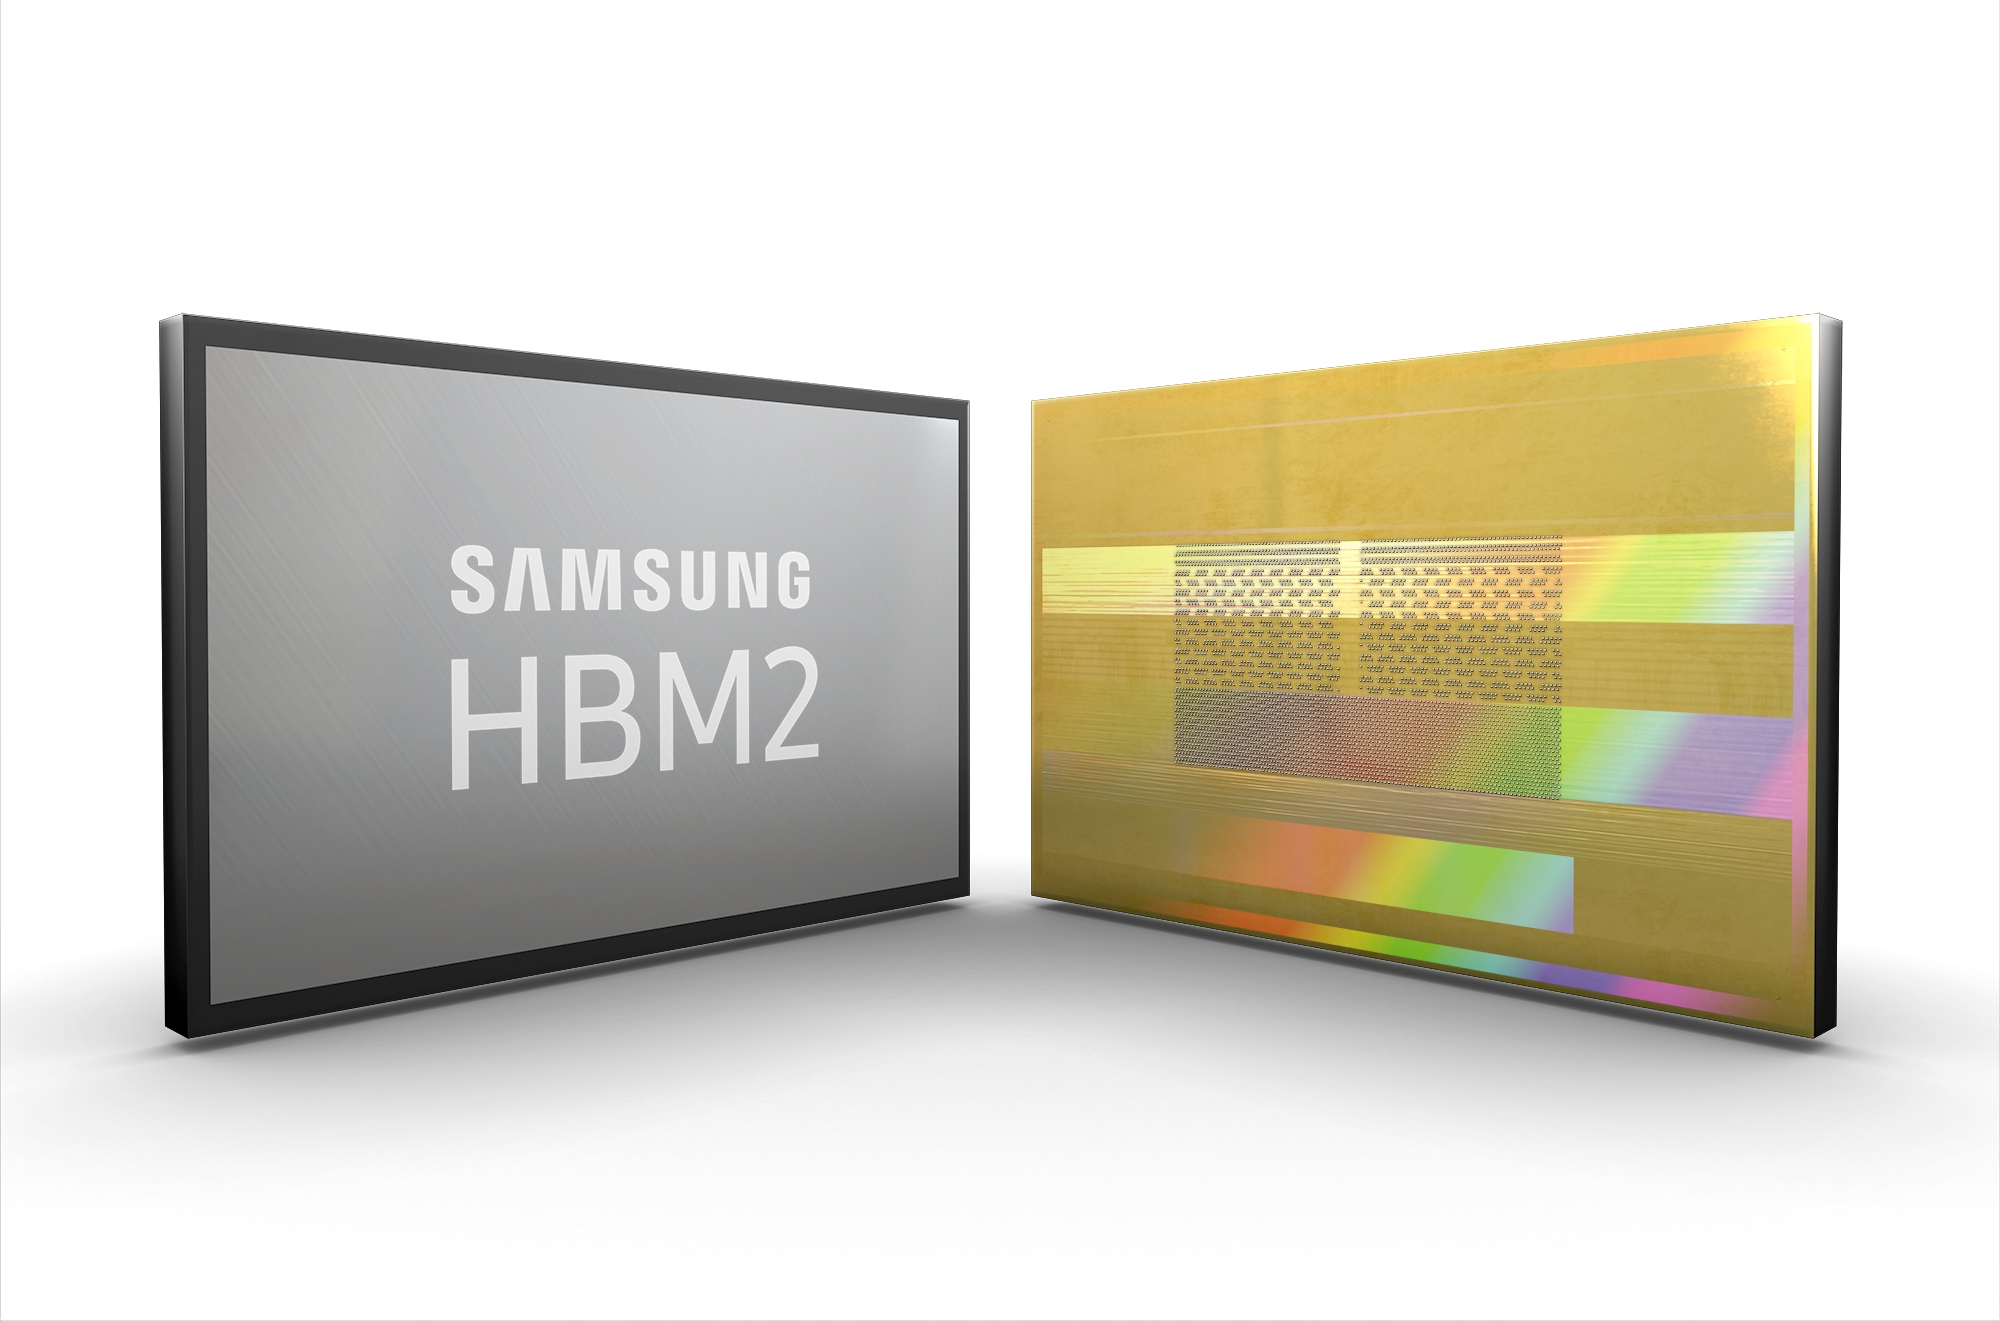 Media asset in full size related to 3dfxzone.it news item entitled as follows: Samsung:  in produzione la memoria HBM2 da 8GB di seconda generazione | Image Name: news27672_Samsung-HBM2-Second-Generation_1.jpg